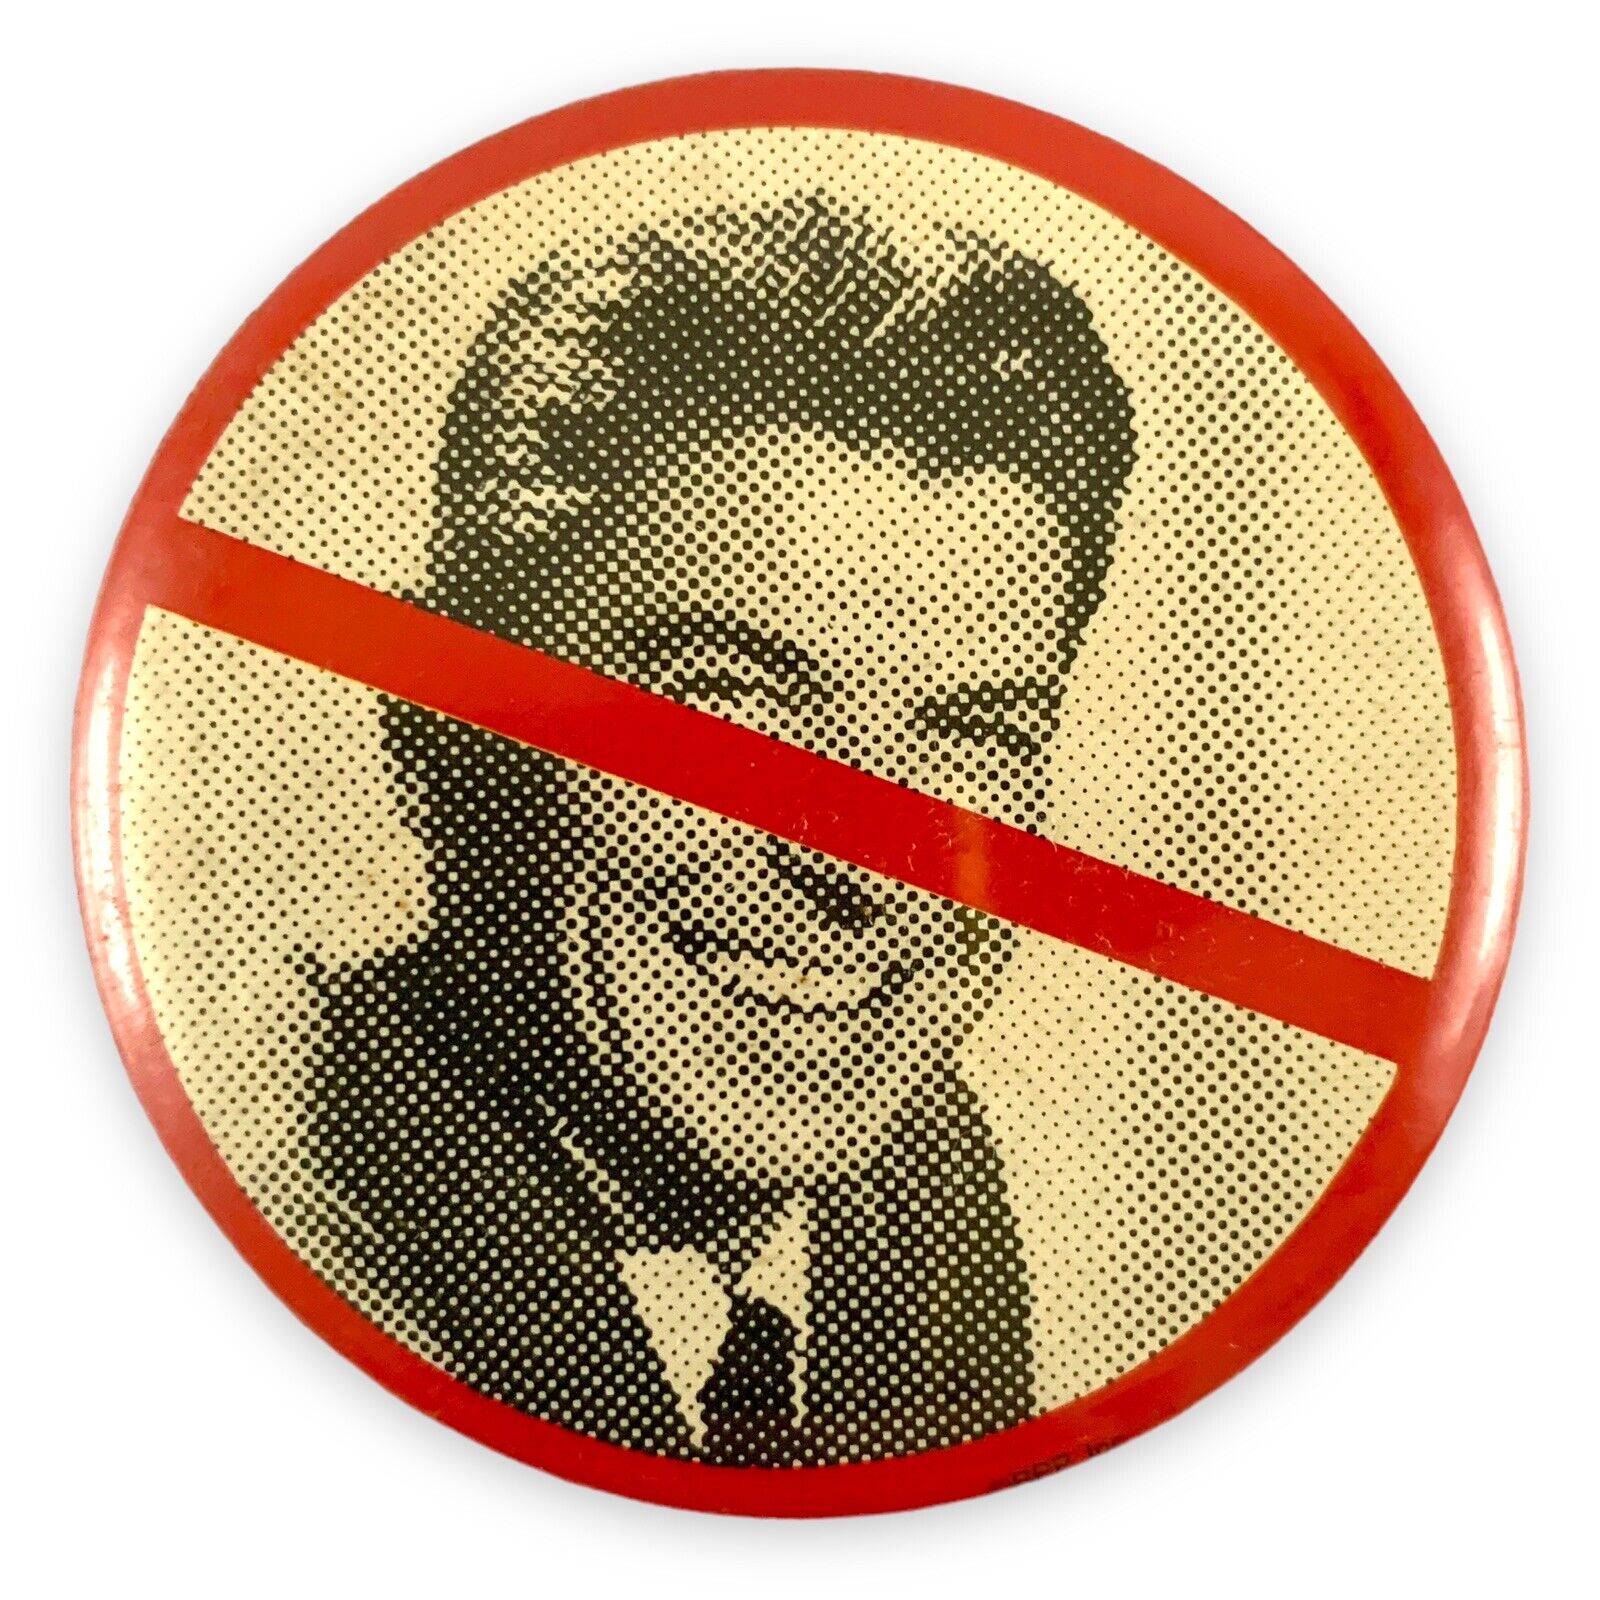 VTG 1980s Anti Ronald Reagan Political Campaign Pin Pinback Button